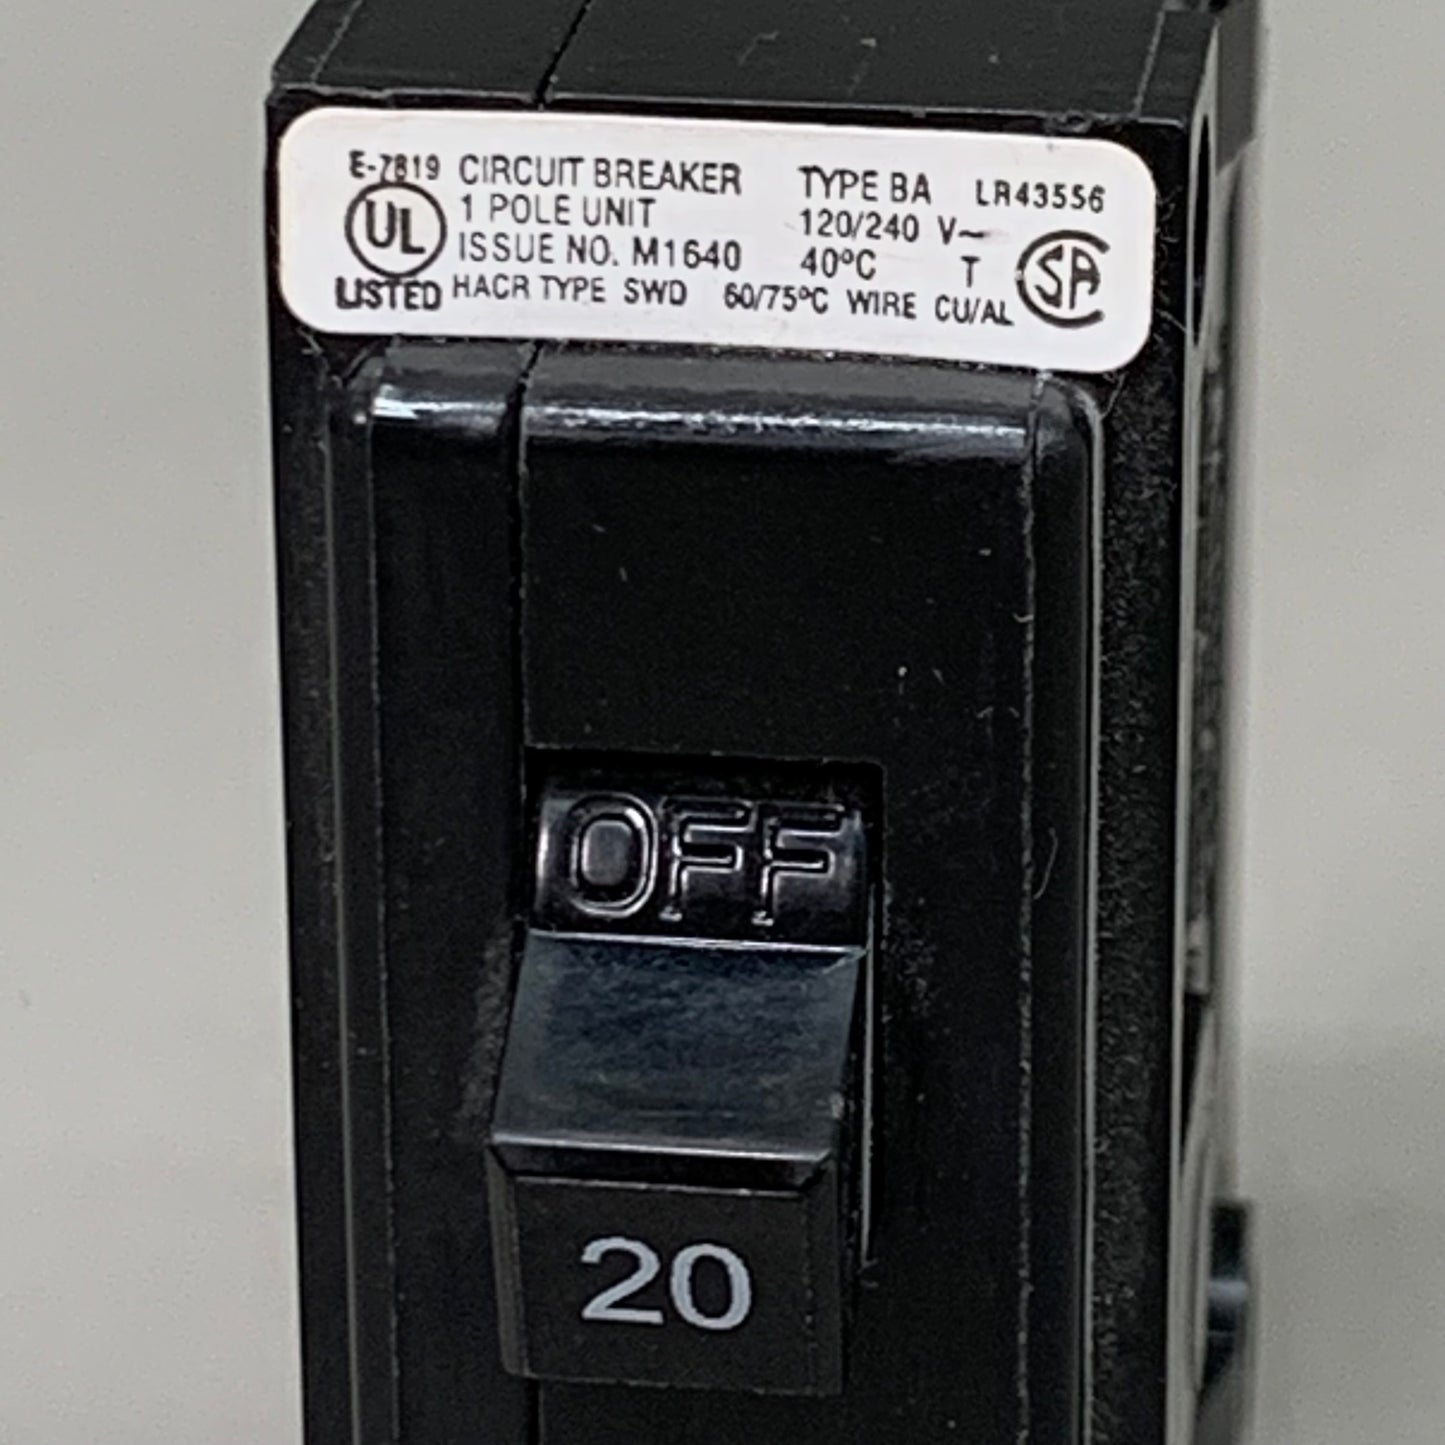 EATON (3 PACK!) BAB Miniature Circuit Breaker 20 3" x 3" Black 150306 AS-IS